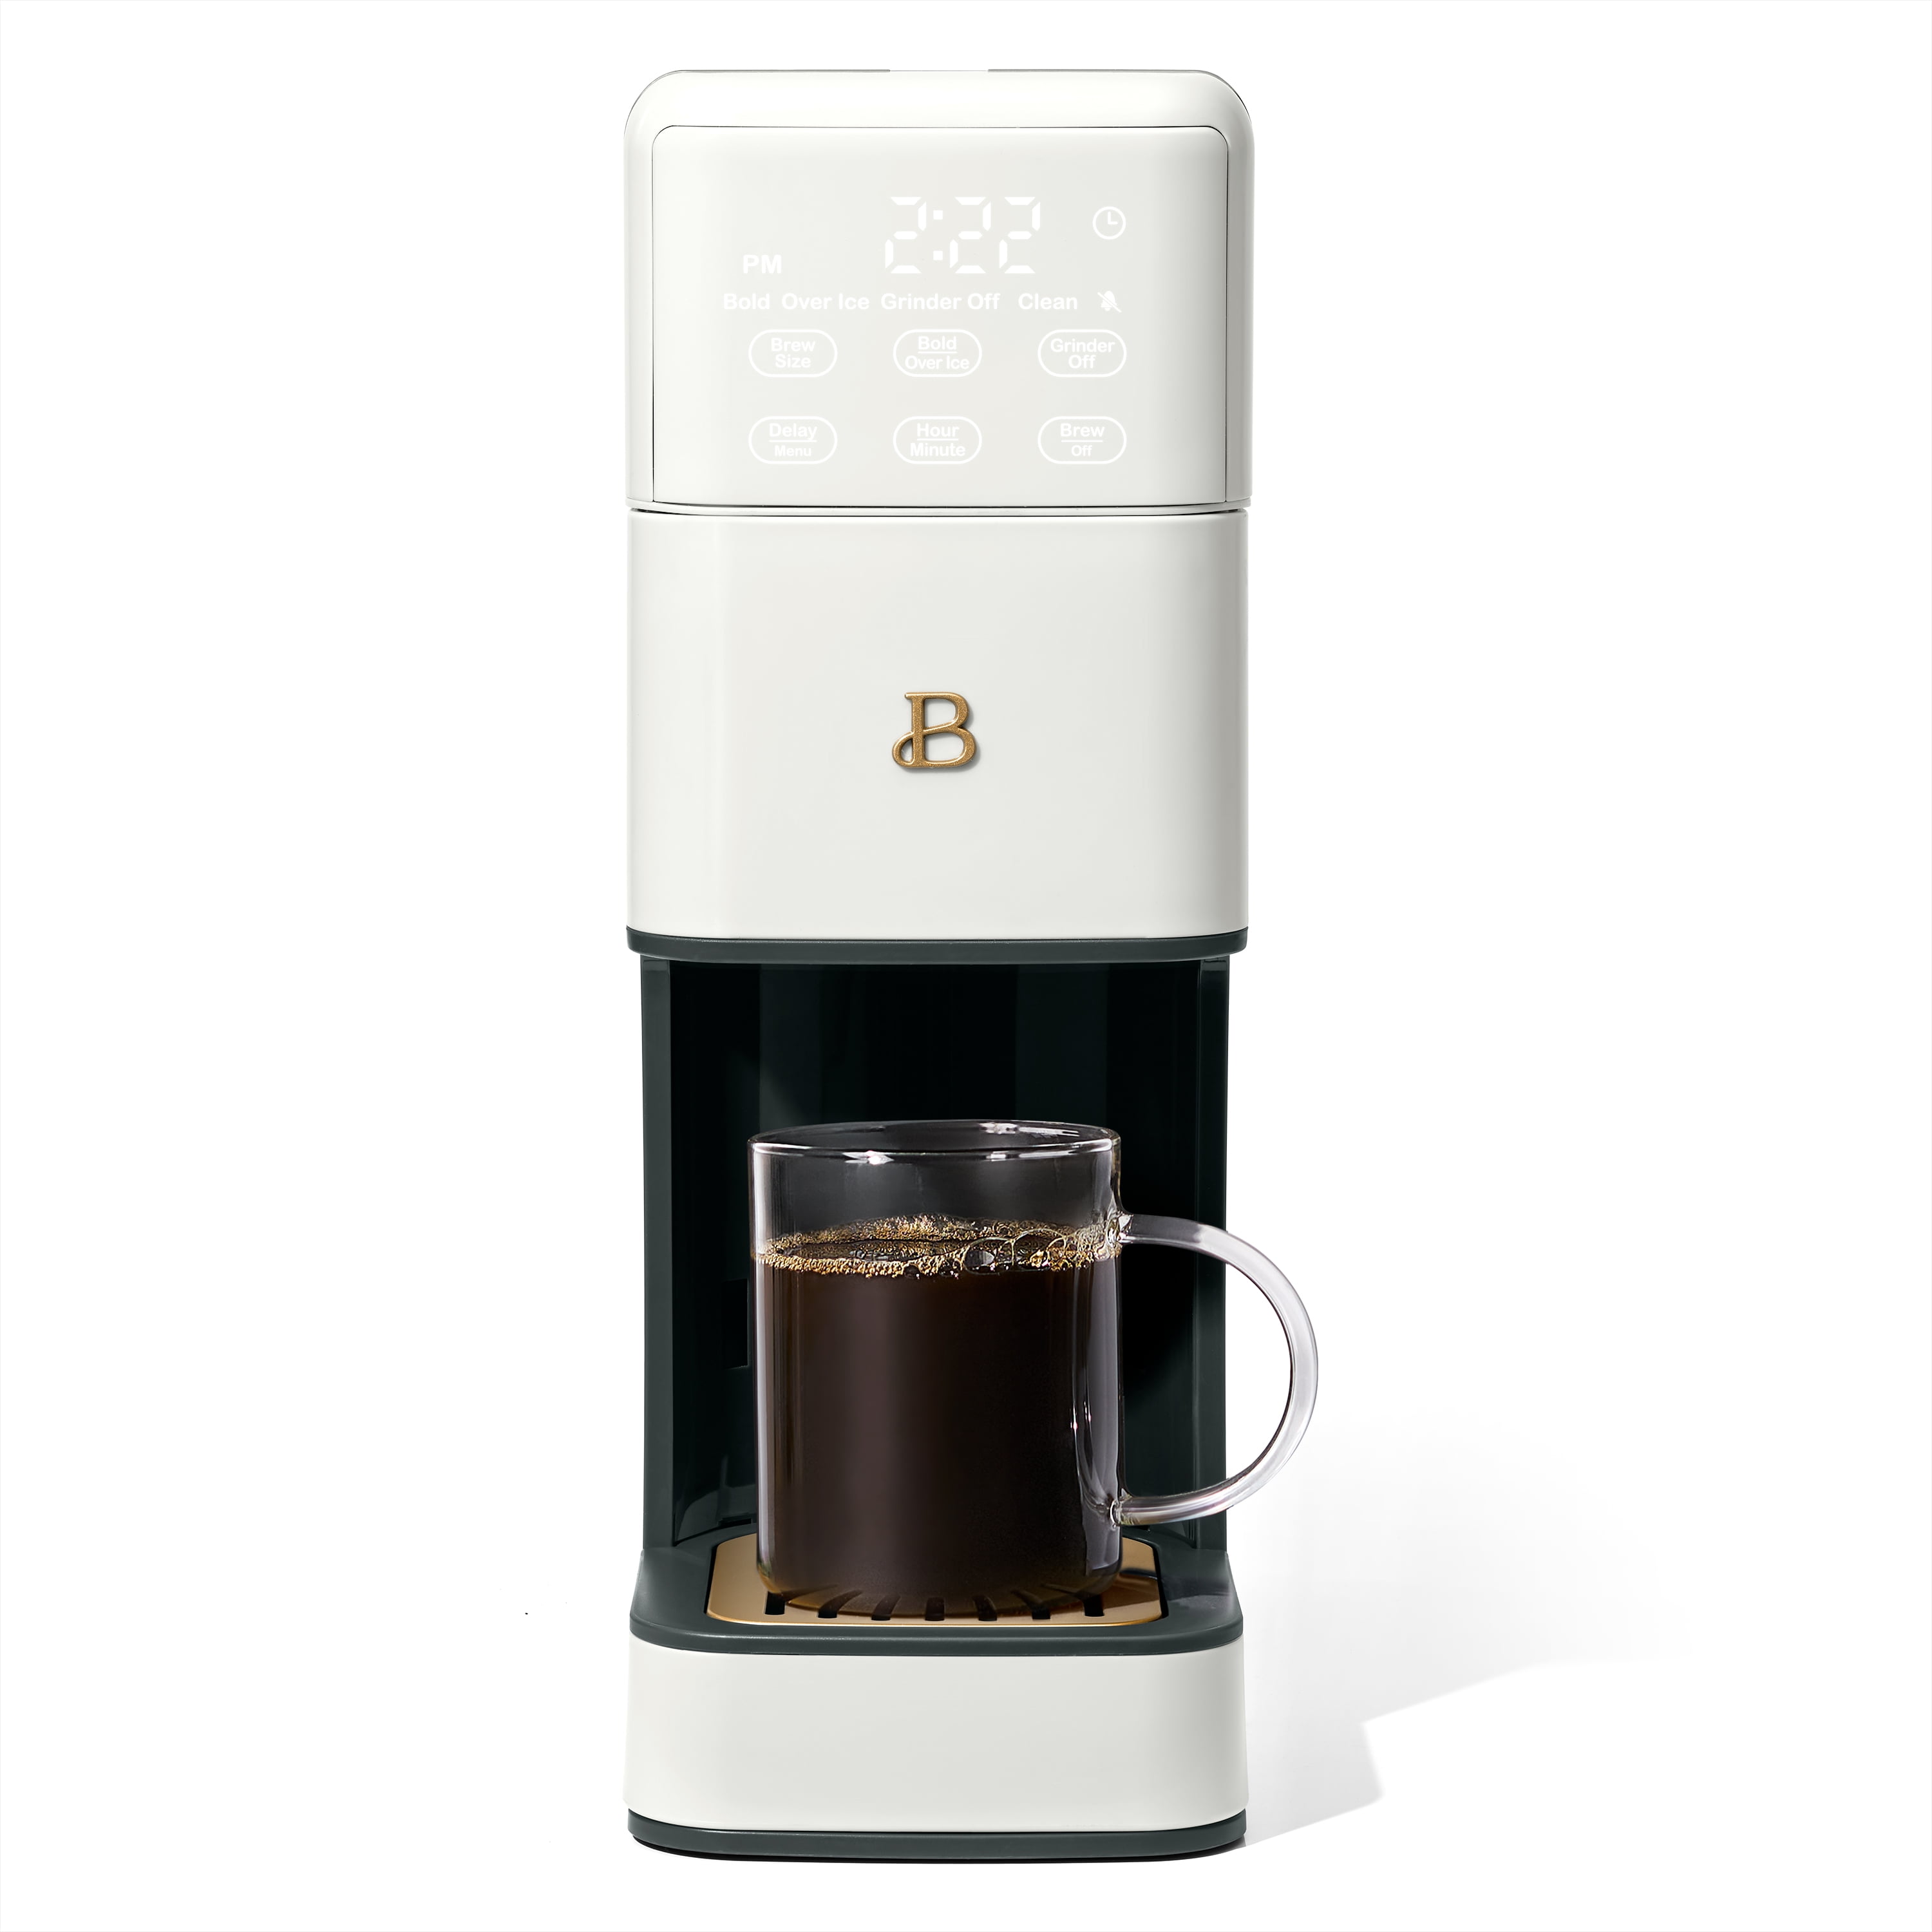 B Coffee Maker (Drew Barrymore) - Coffee Makers - La Center, Washington